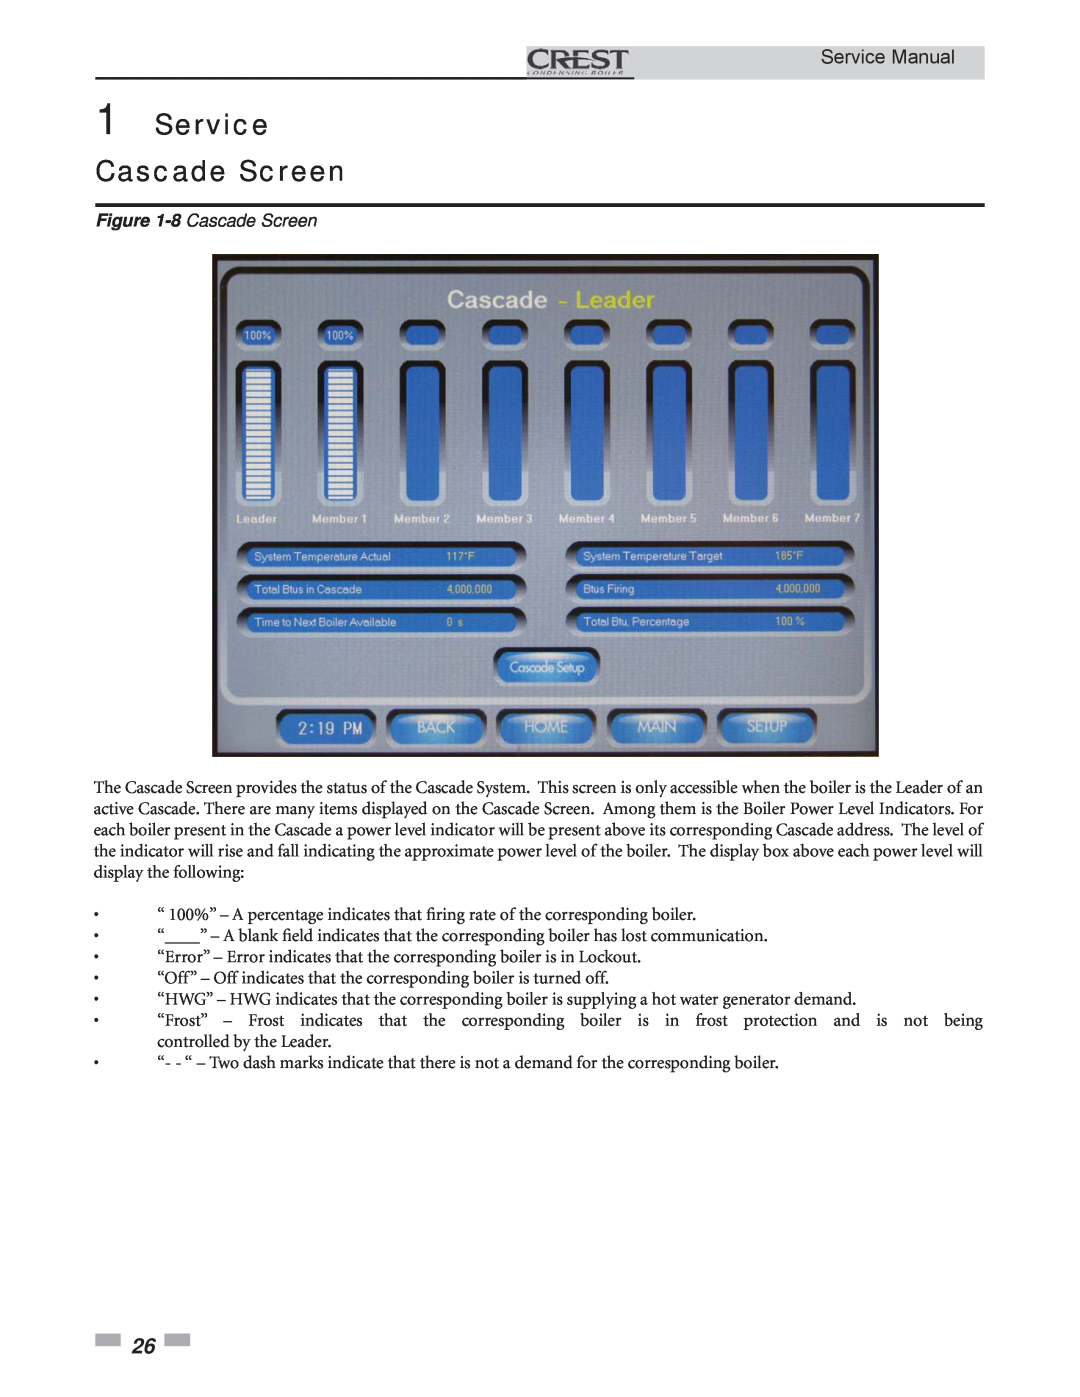 Lochinvar 3.5, 1.5, 2.5 service manual Service Cascade Screen, 8 Cascade Screen 